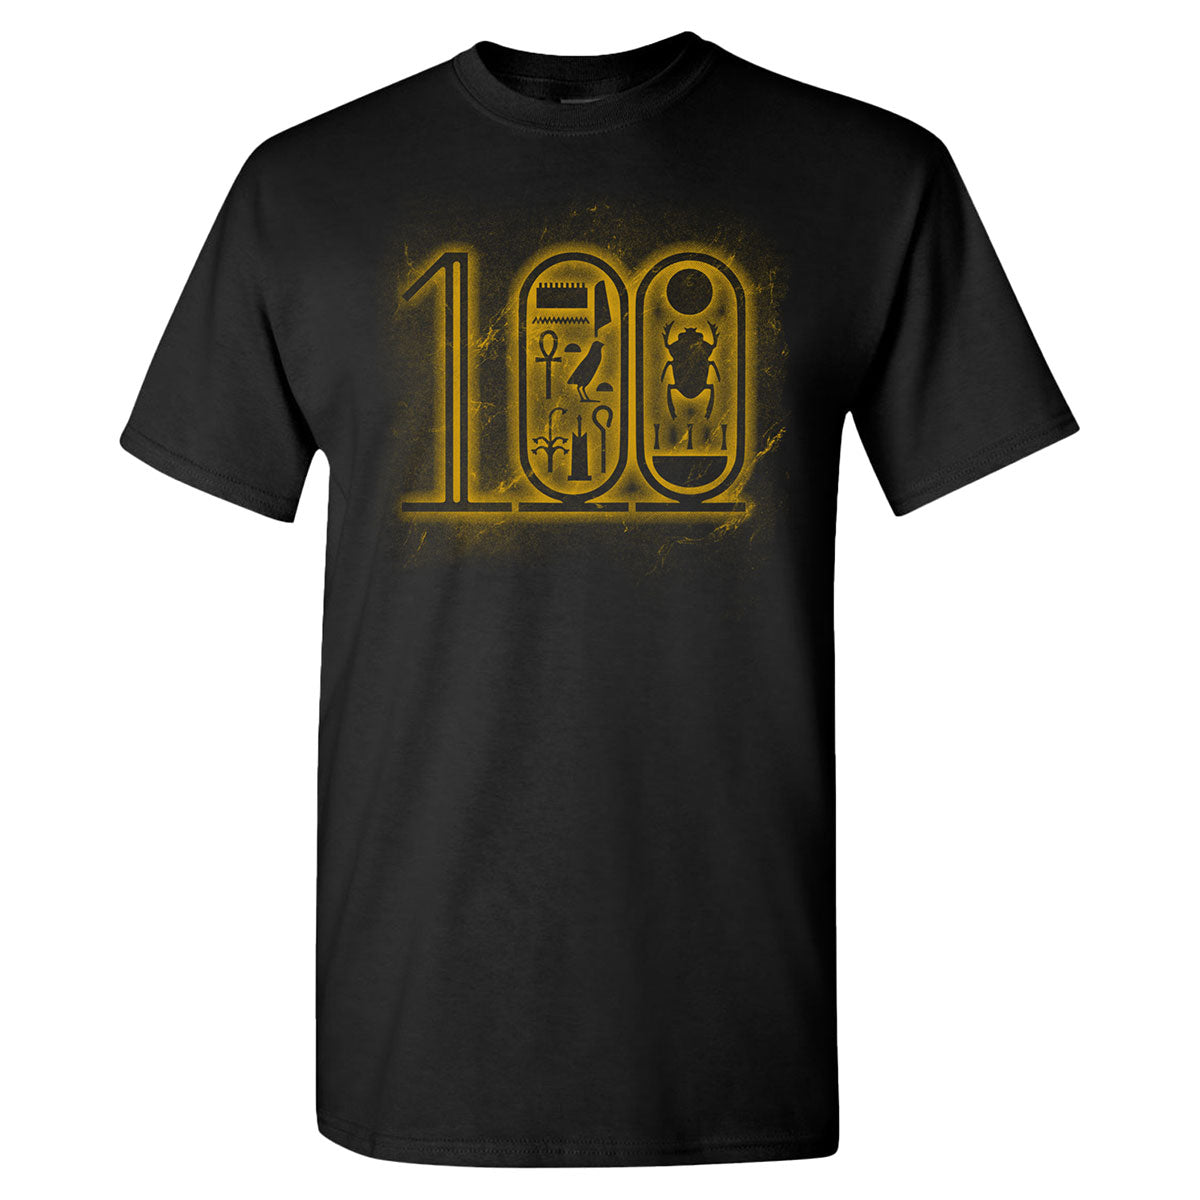 100th Anniversary T-Shirt - Black